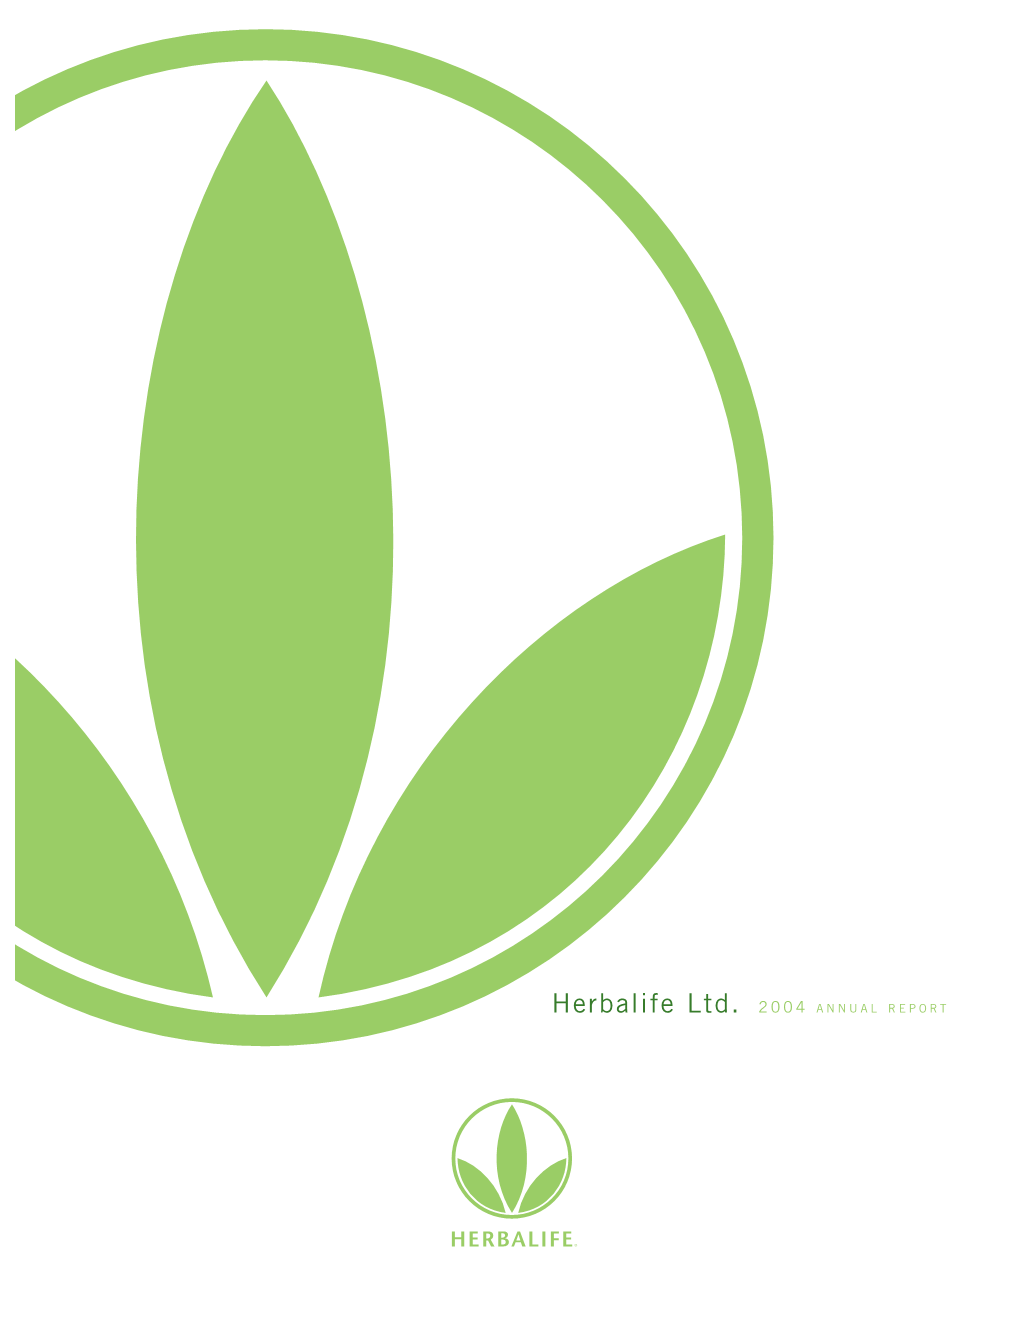 Herbalife Ltd. 2004 ANNUAL REPORT Dear Shareholders